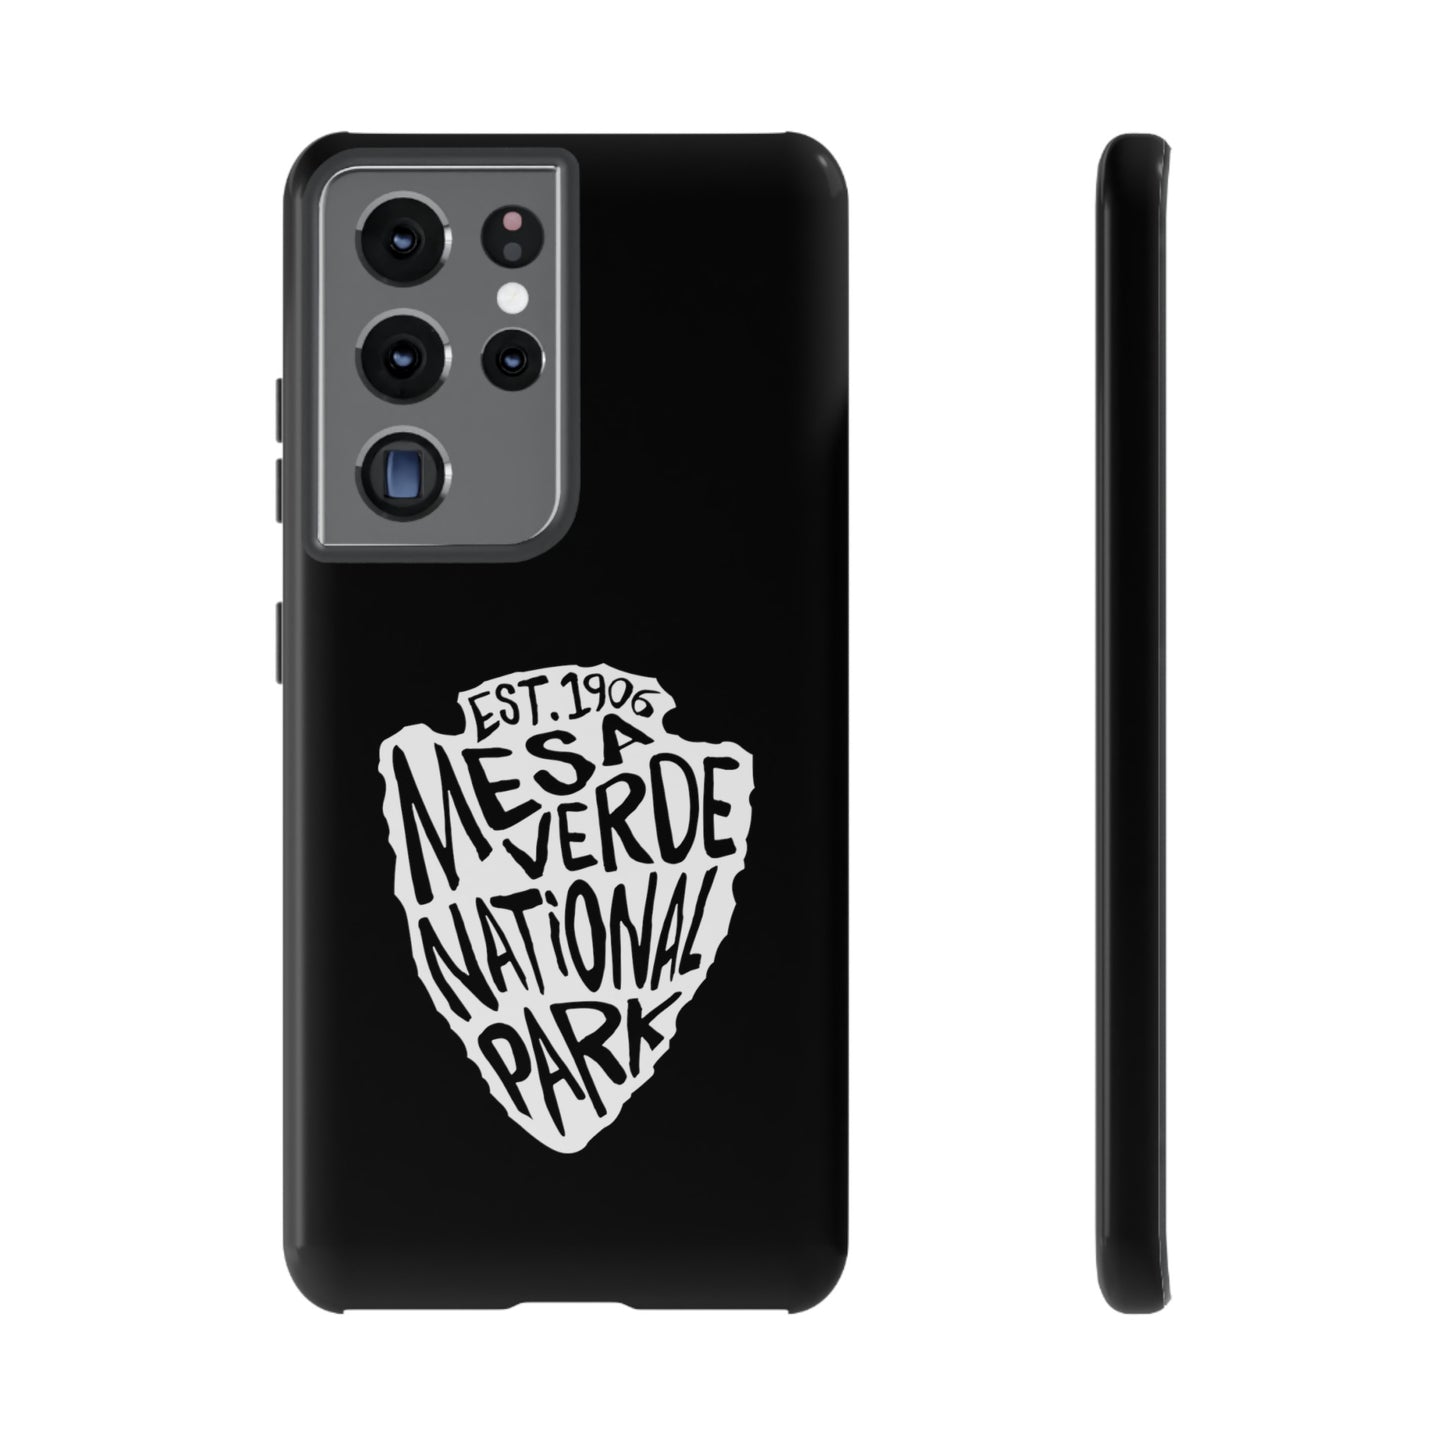 Mesa Verde National Park Phone Case - Arrowhead Design